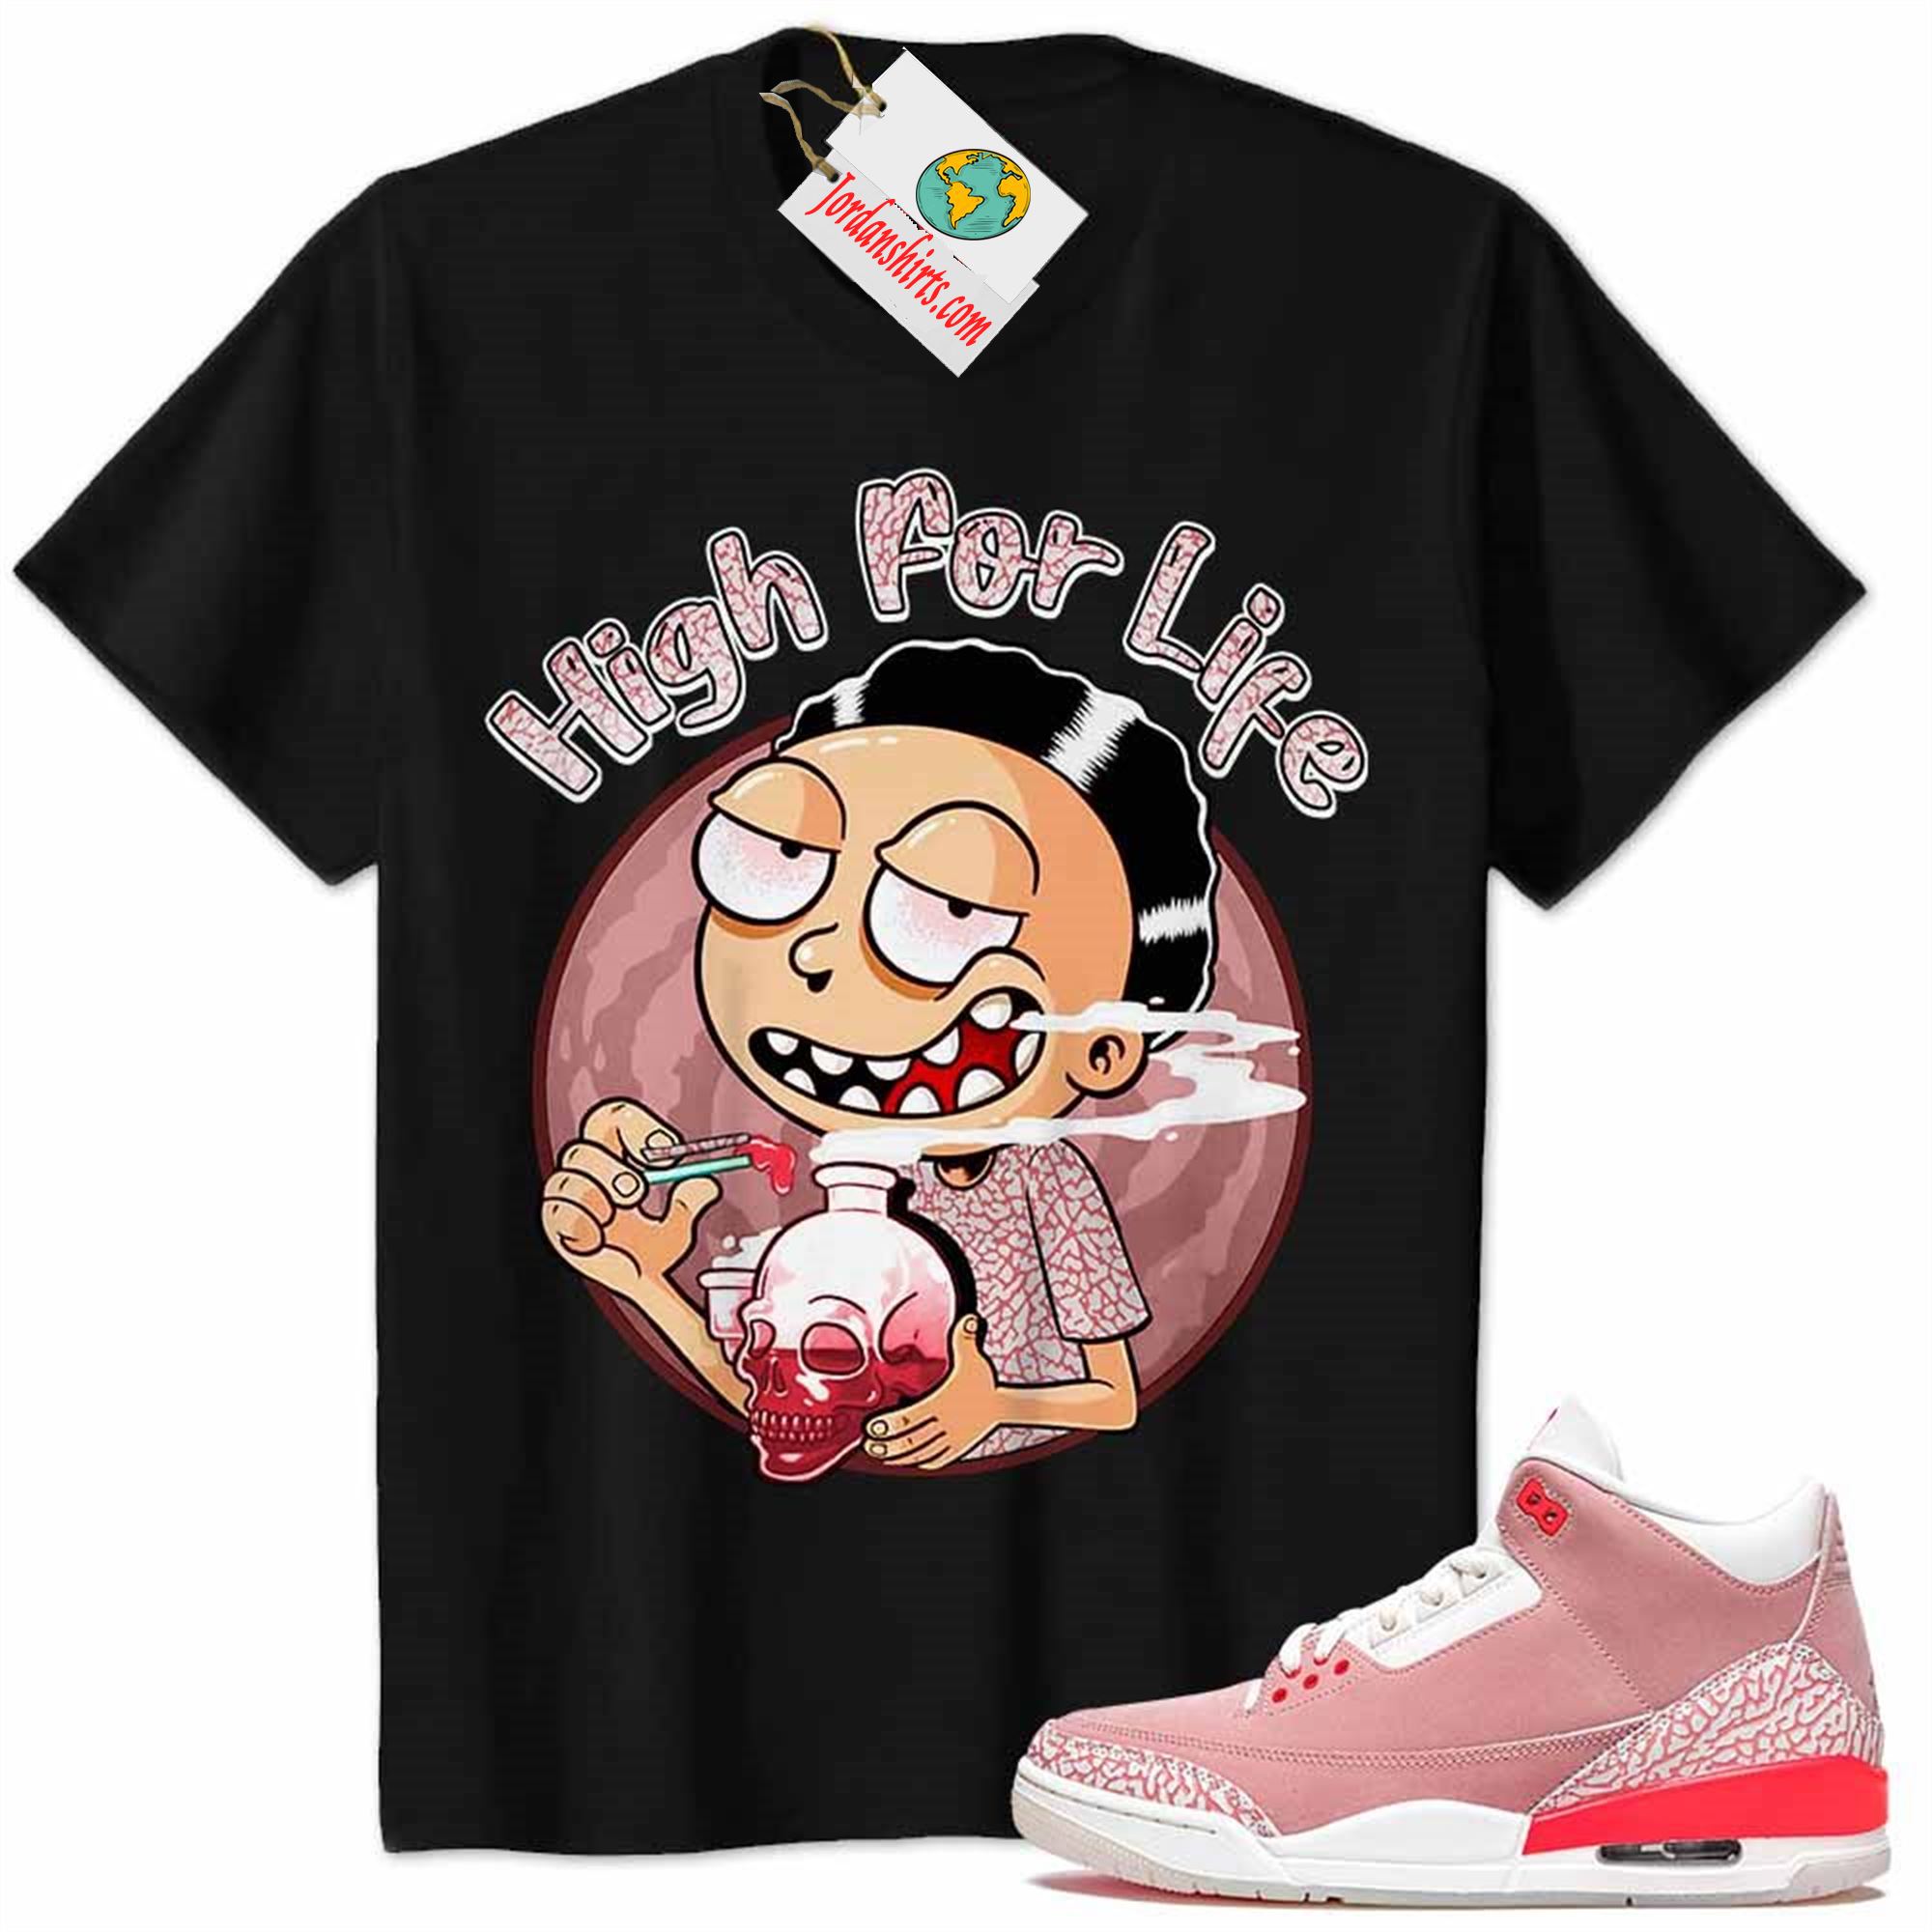 Jordan 3 Shirt, Jordan 3 Rust Pink Shirt Morty High For Life Black Full Size Up To 5xl